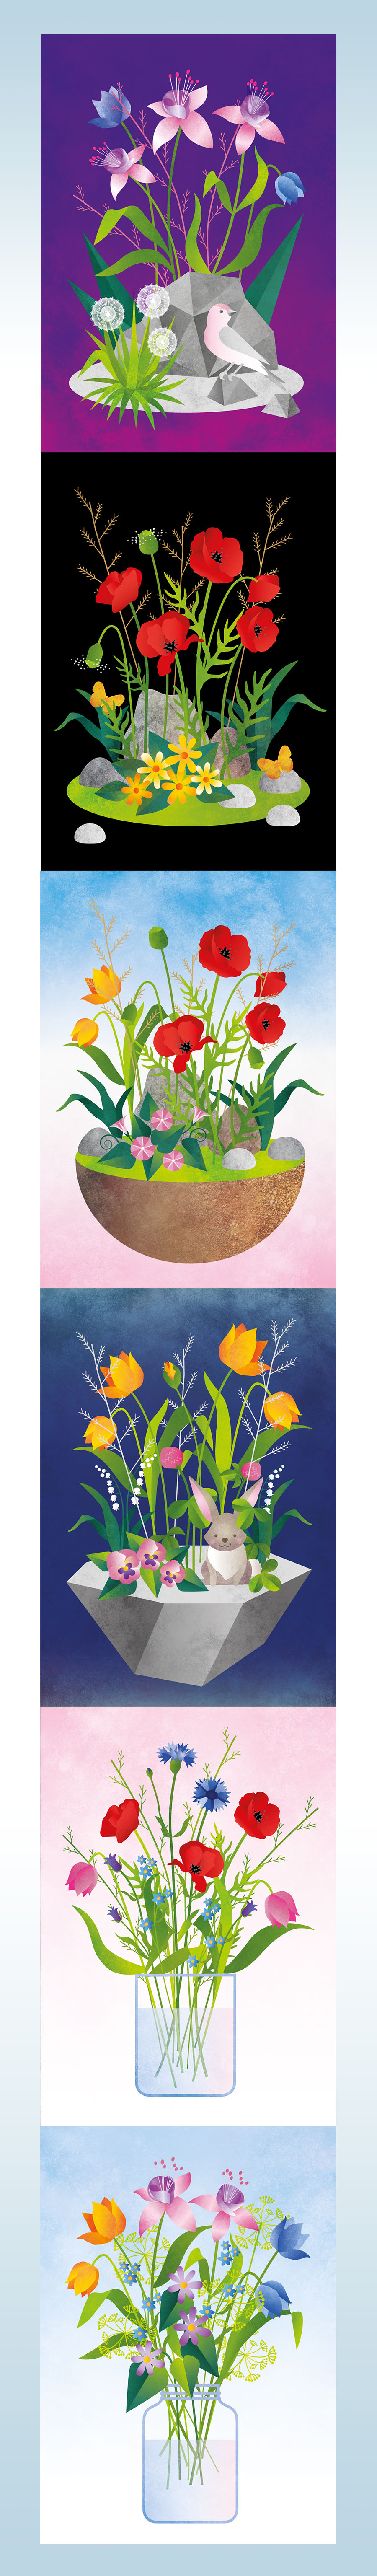 Illustration _Project _Flowers2